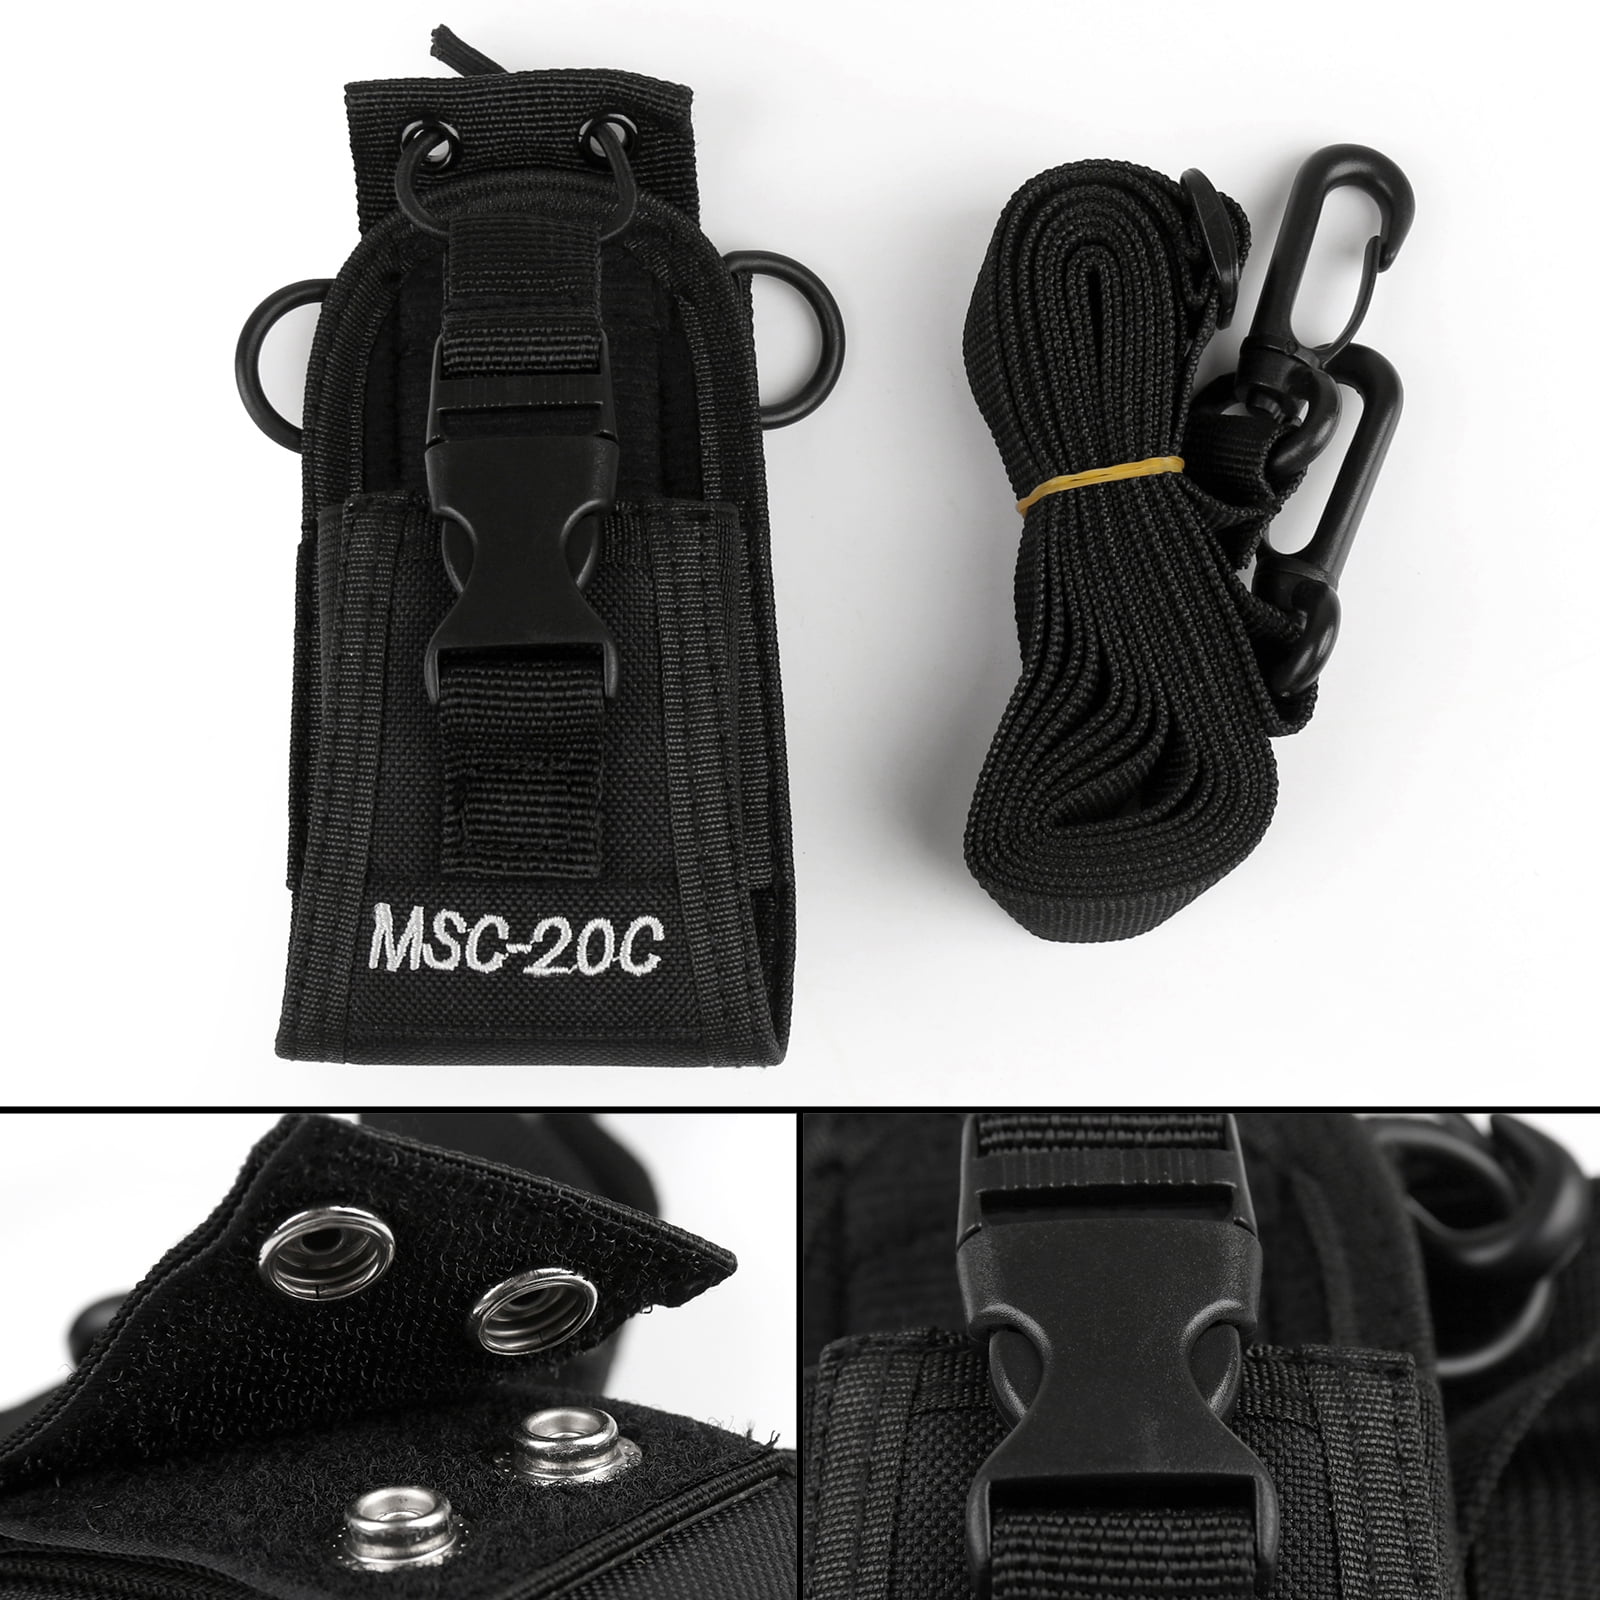 5x Msc-20a Multi-function Radio Holder Case for Baofeng Motorola Kenwood Uv82 US for sale online 